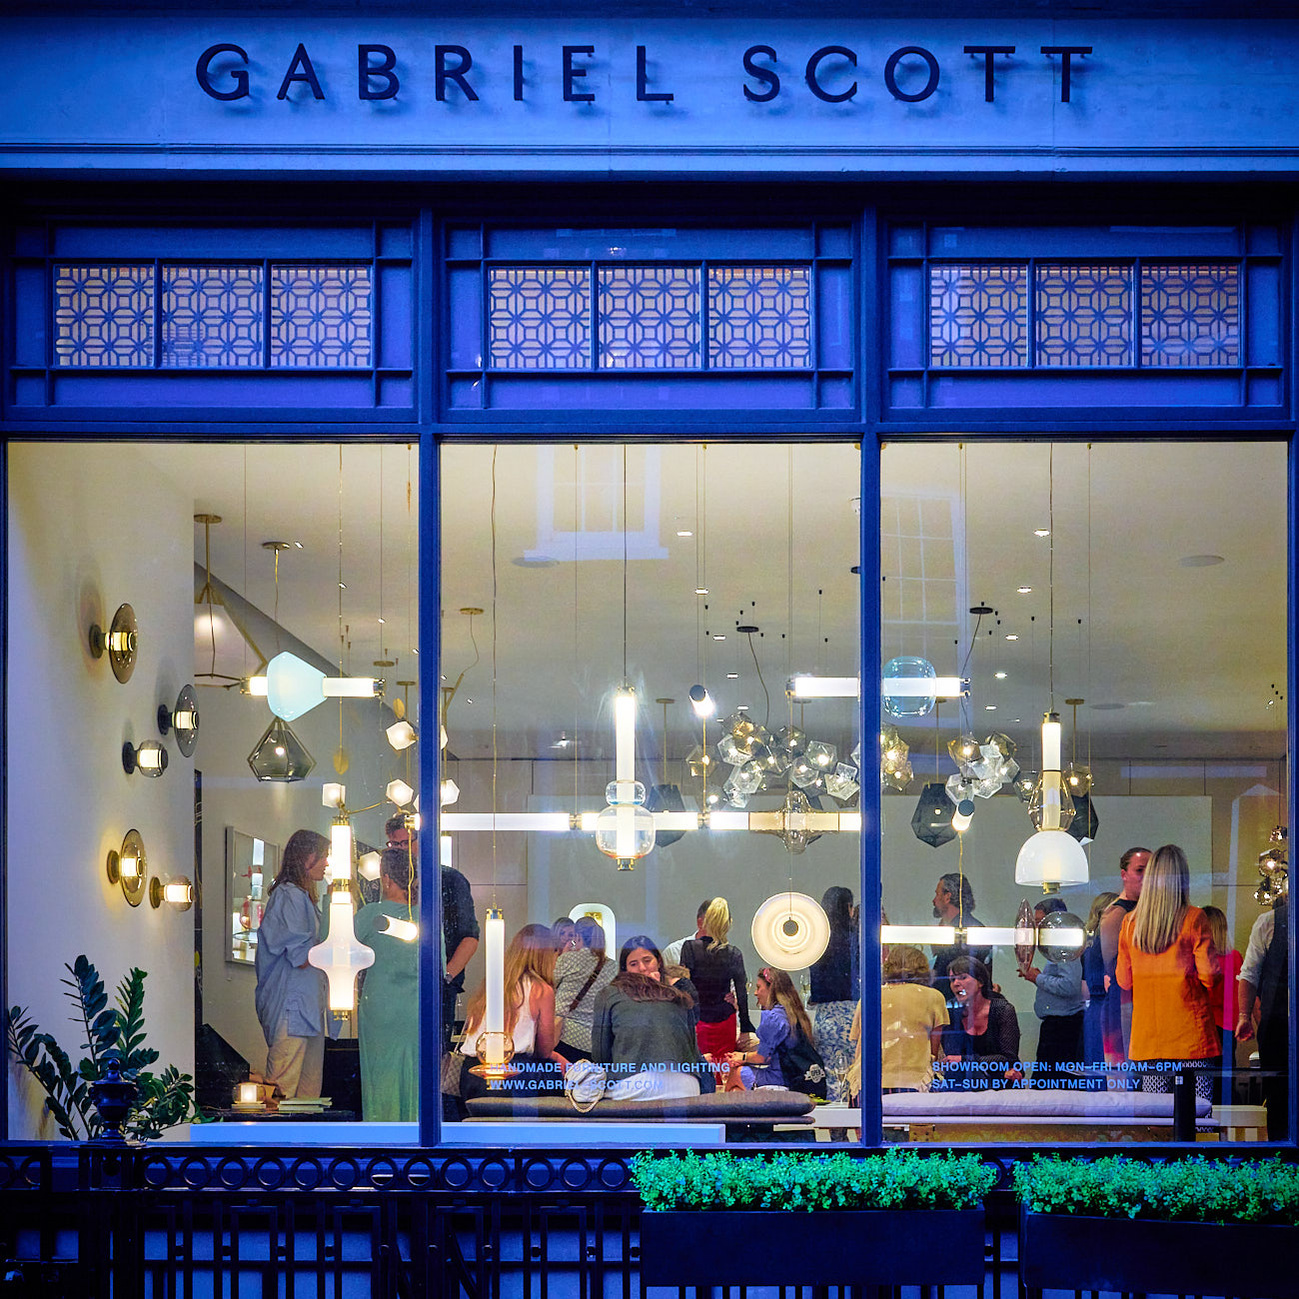 The gabriel scott store in london at night.